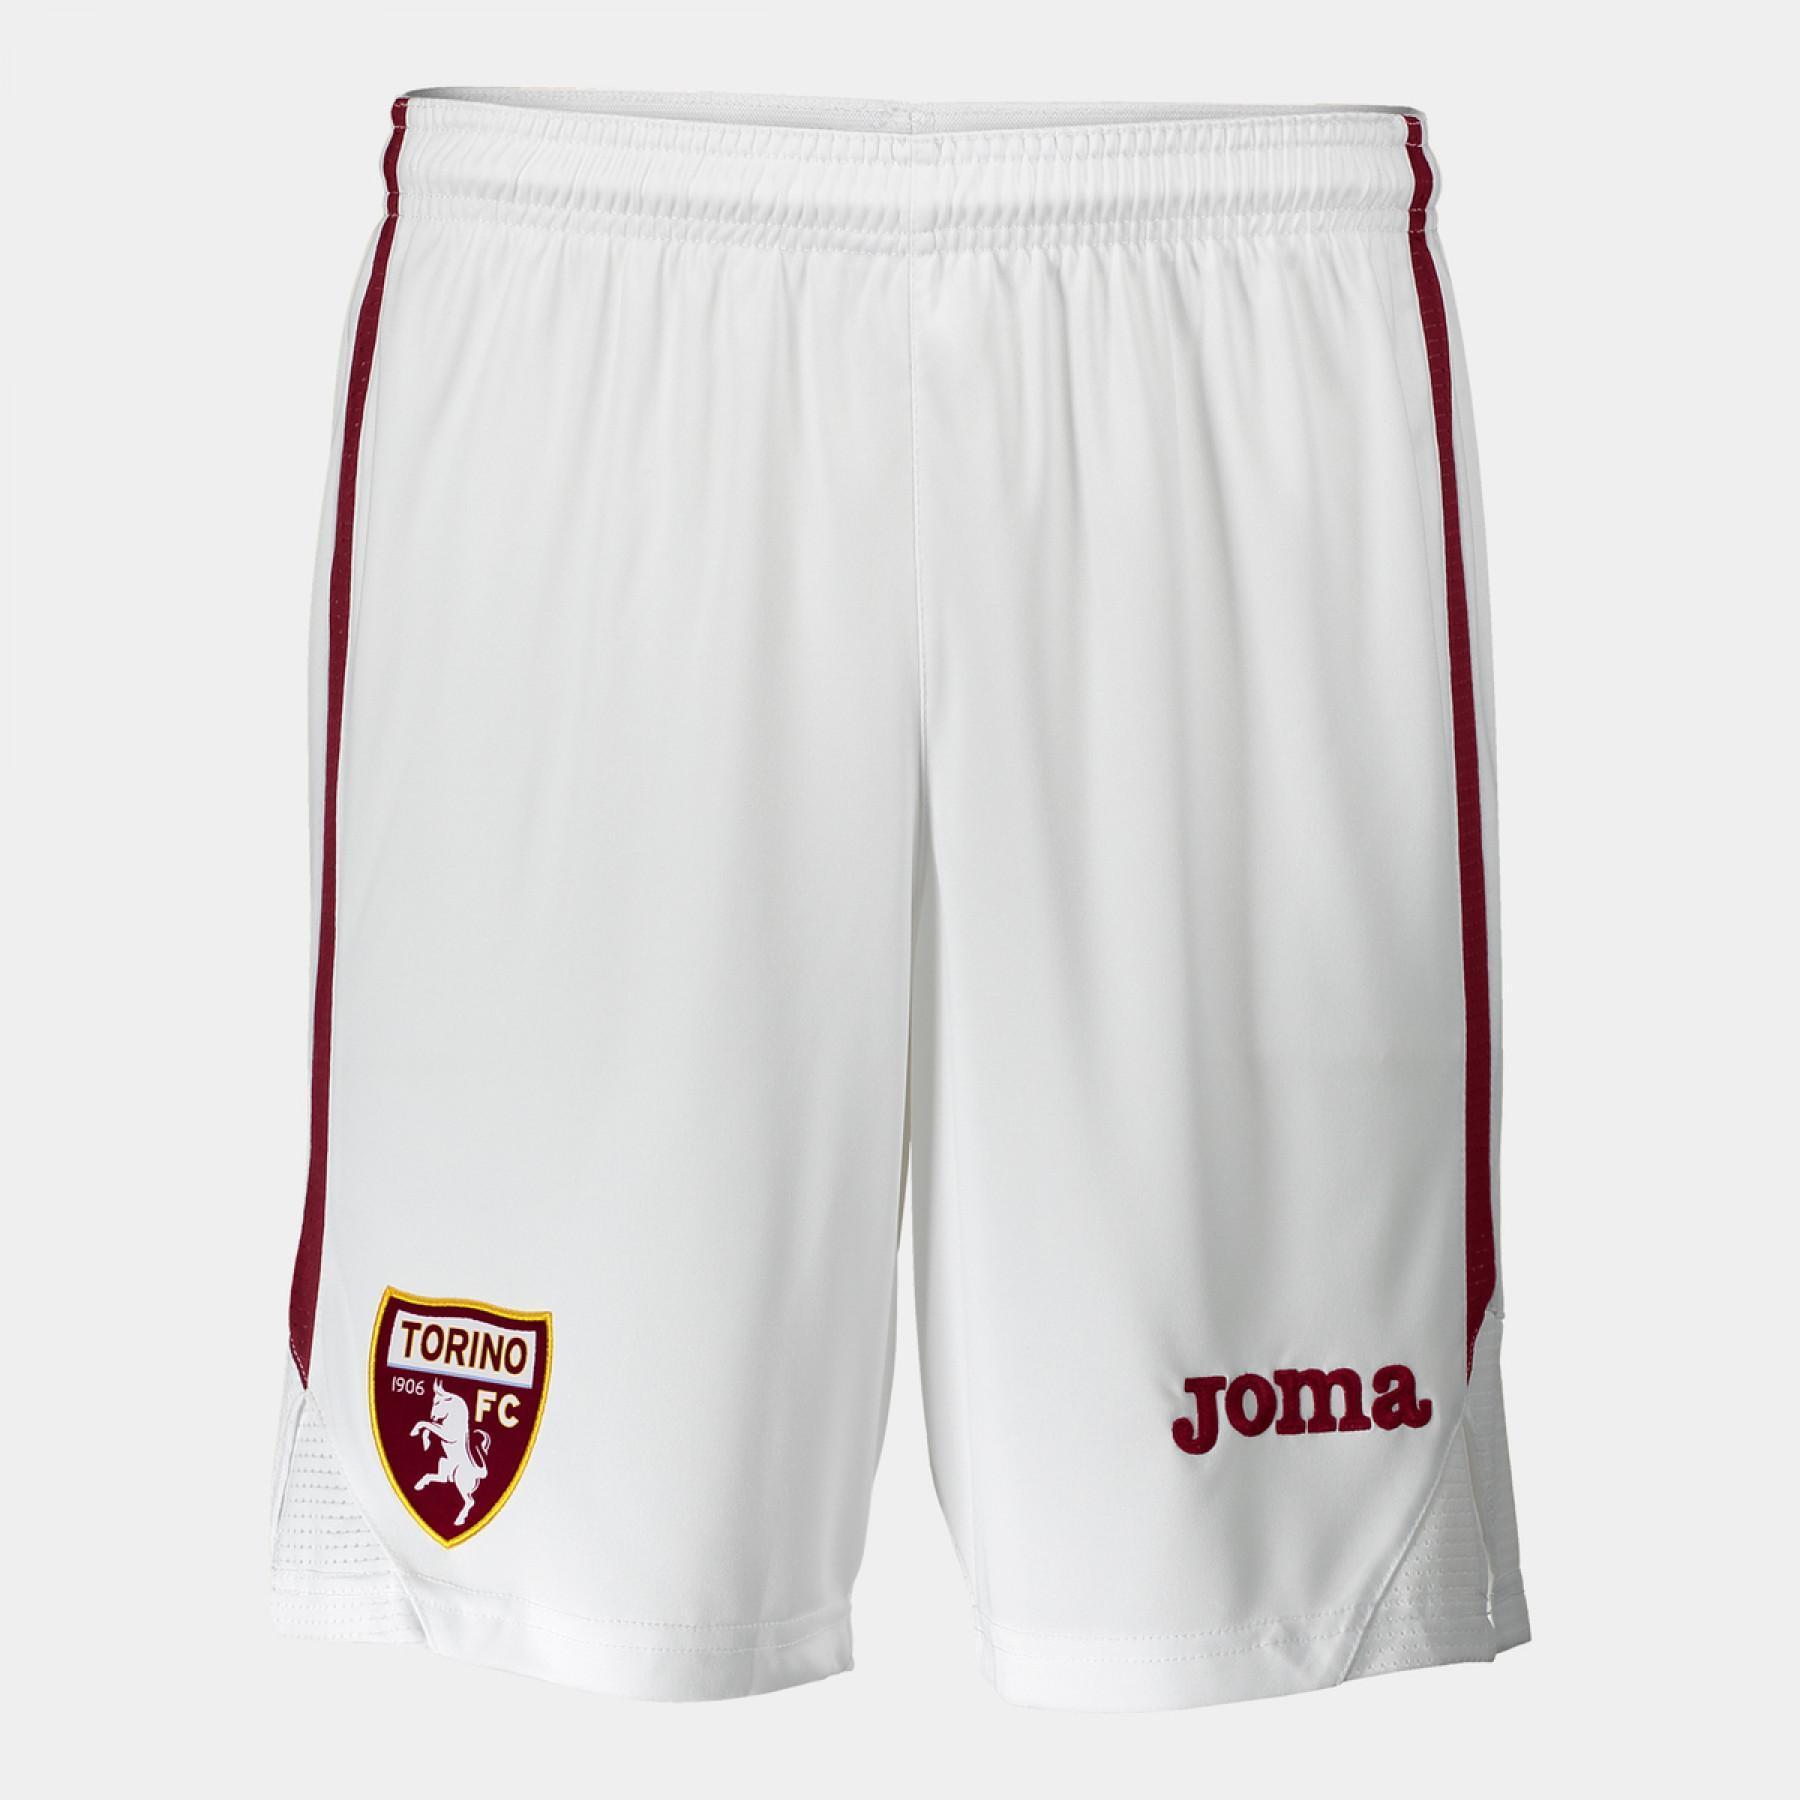 Outdoor shorts Torino FC 2020/21